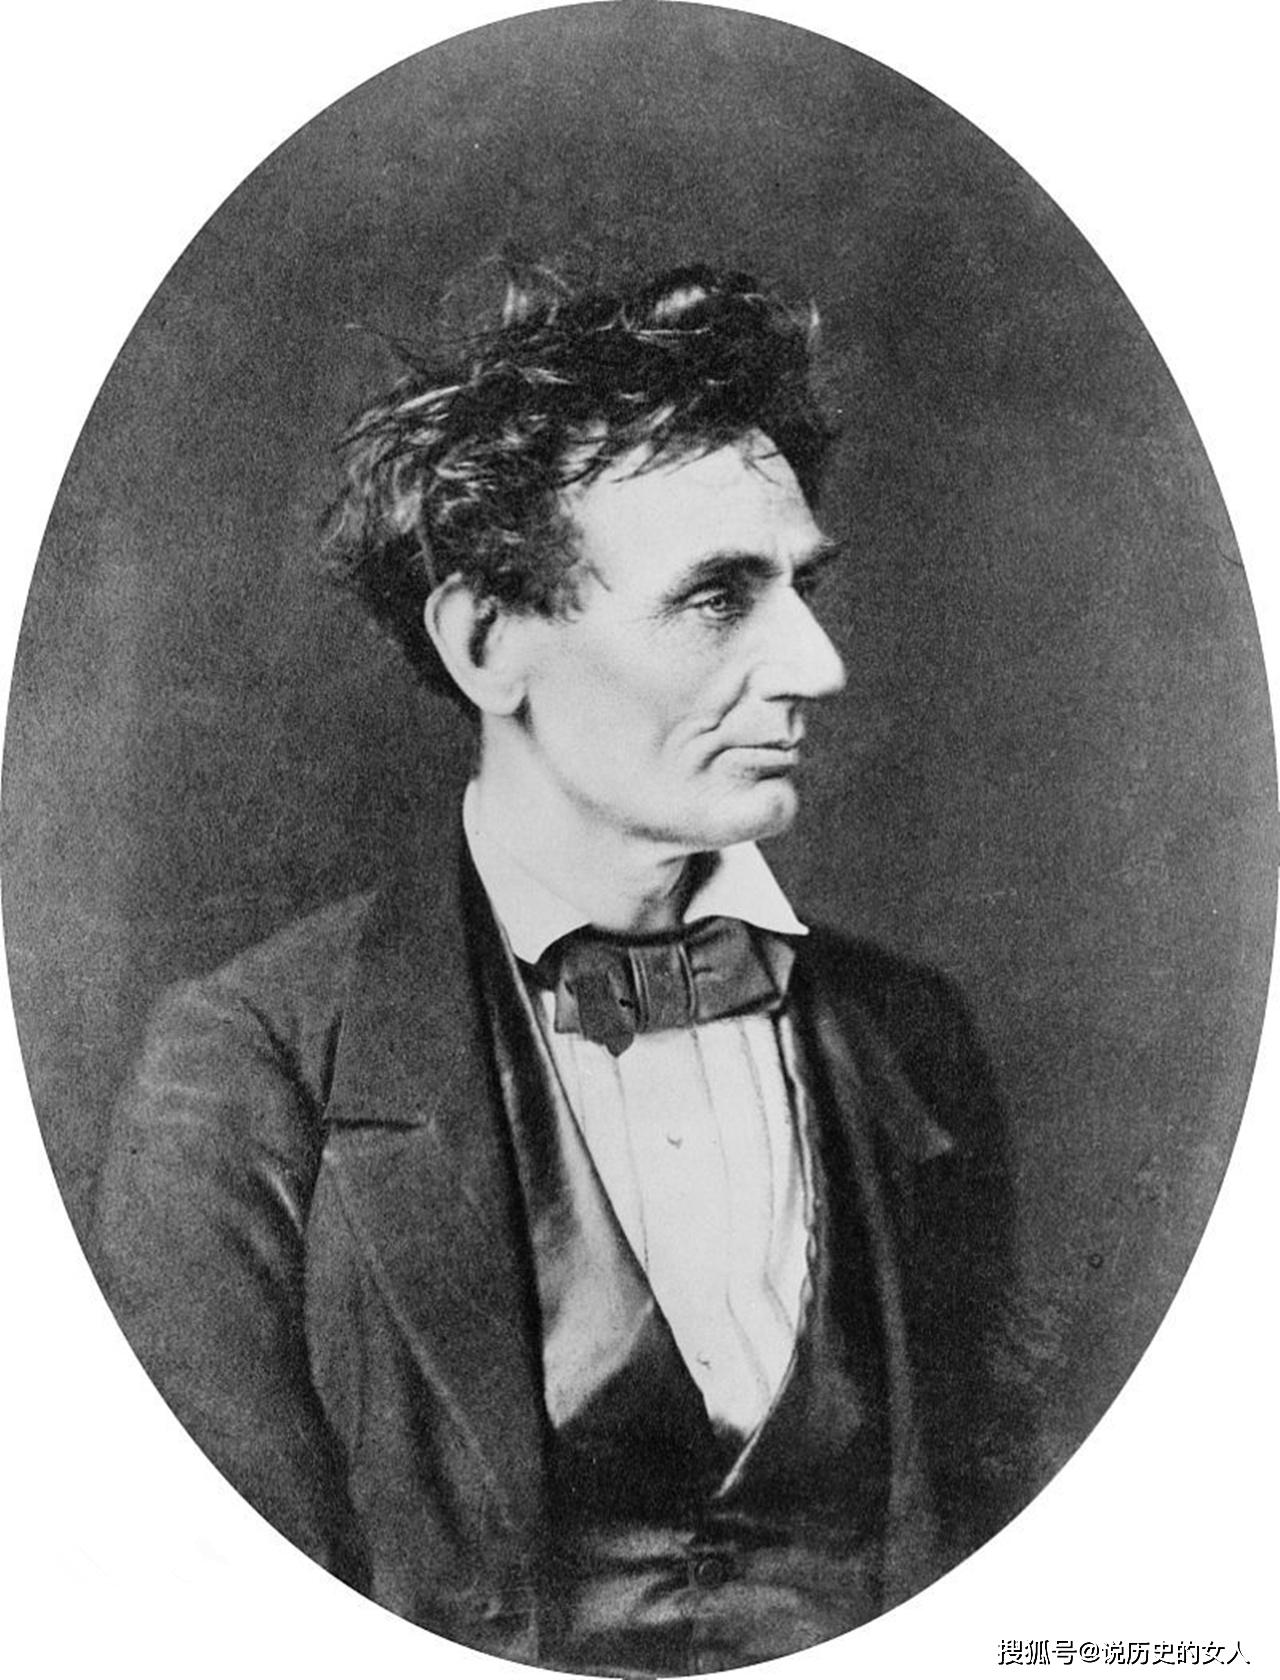 The Murder of President Lincoln